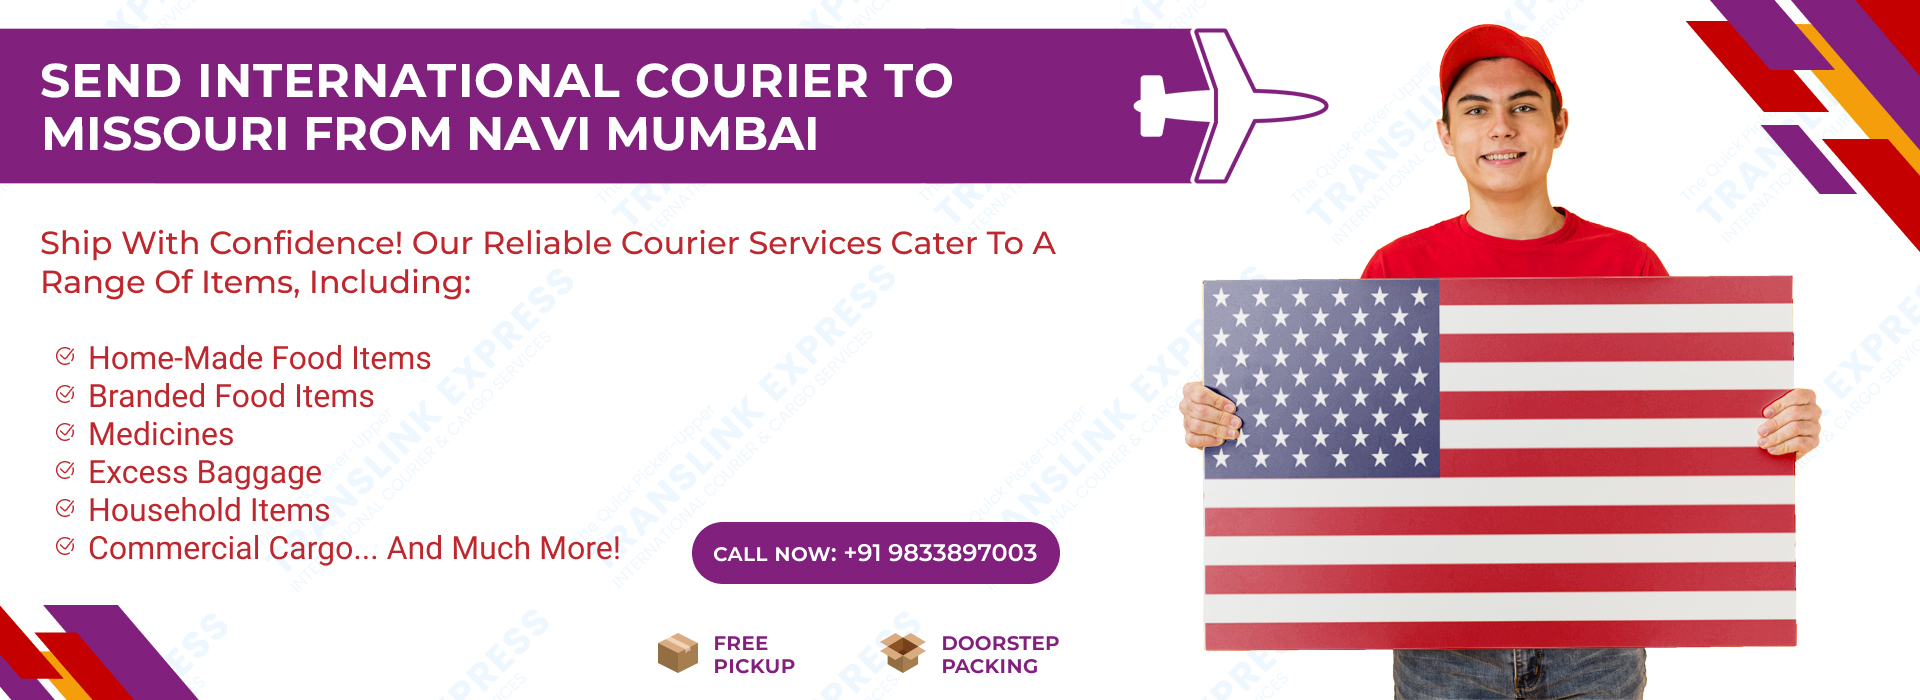 Courier to Missouri From Navi Mumbai